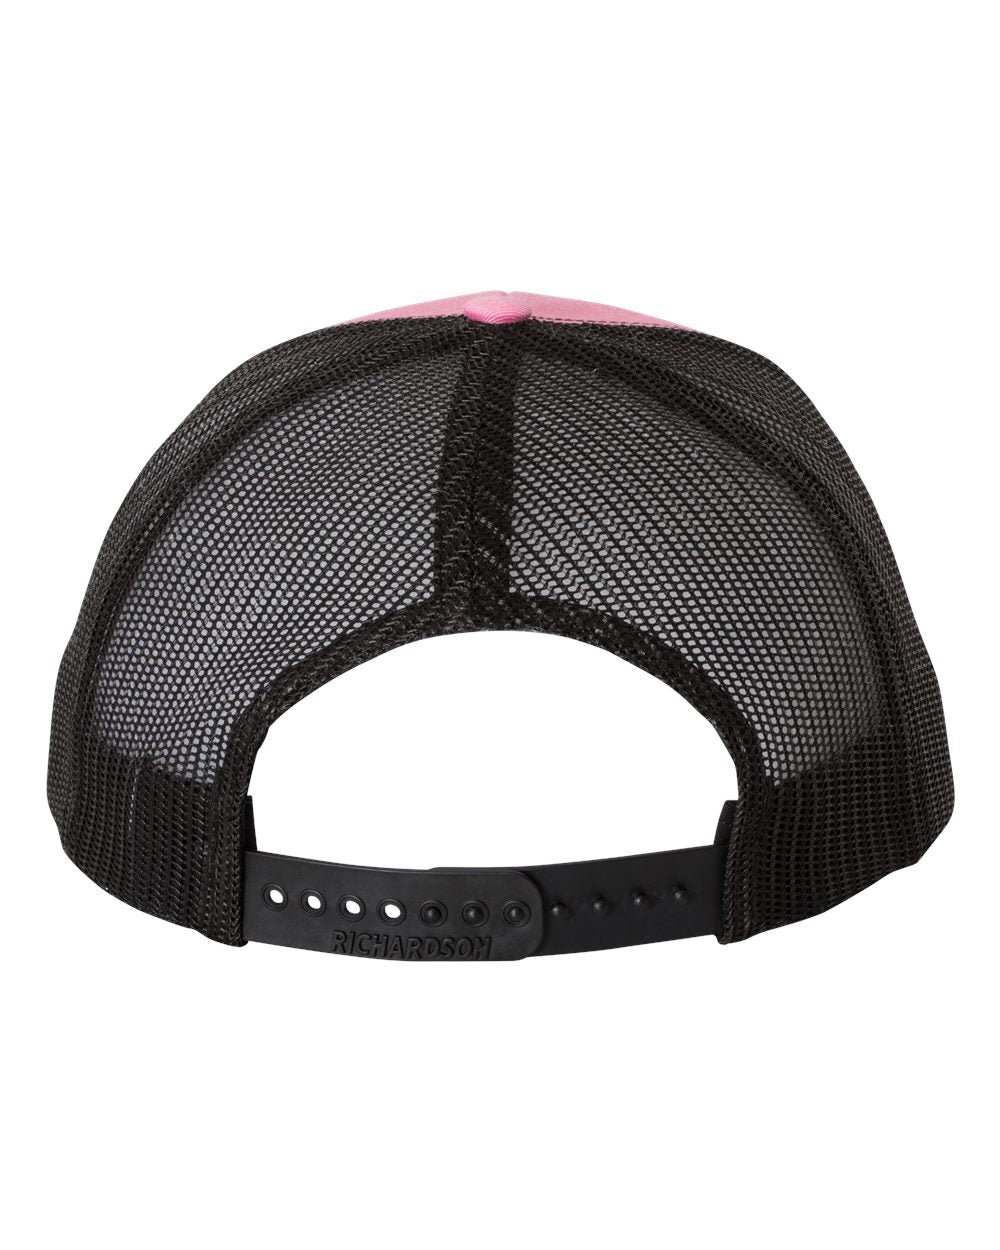 Astros Retro Astrodome Classic 3D Snapback Trucker Hat- Hot Pink/ Black - Ten Gallon Hat Co.